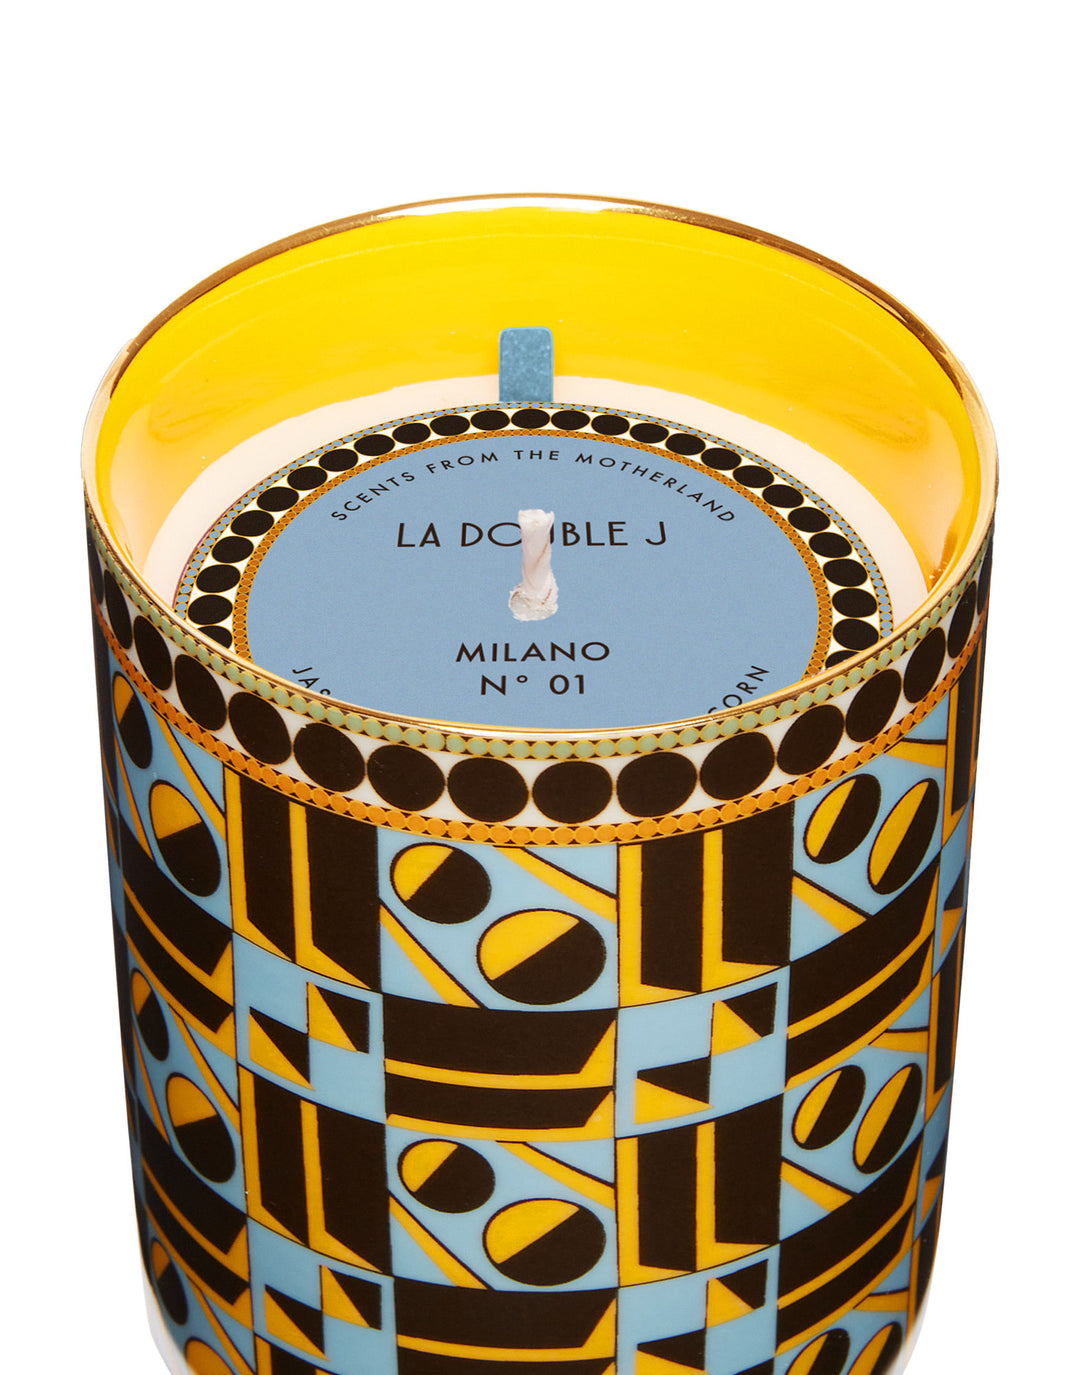 Milano Candle - La Double J - Ileana Makri store